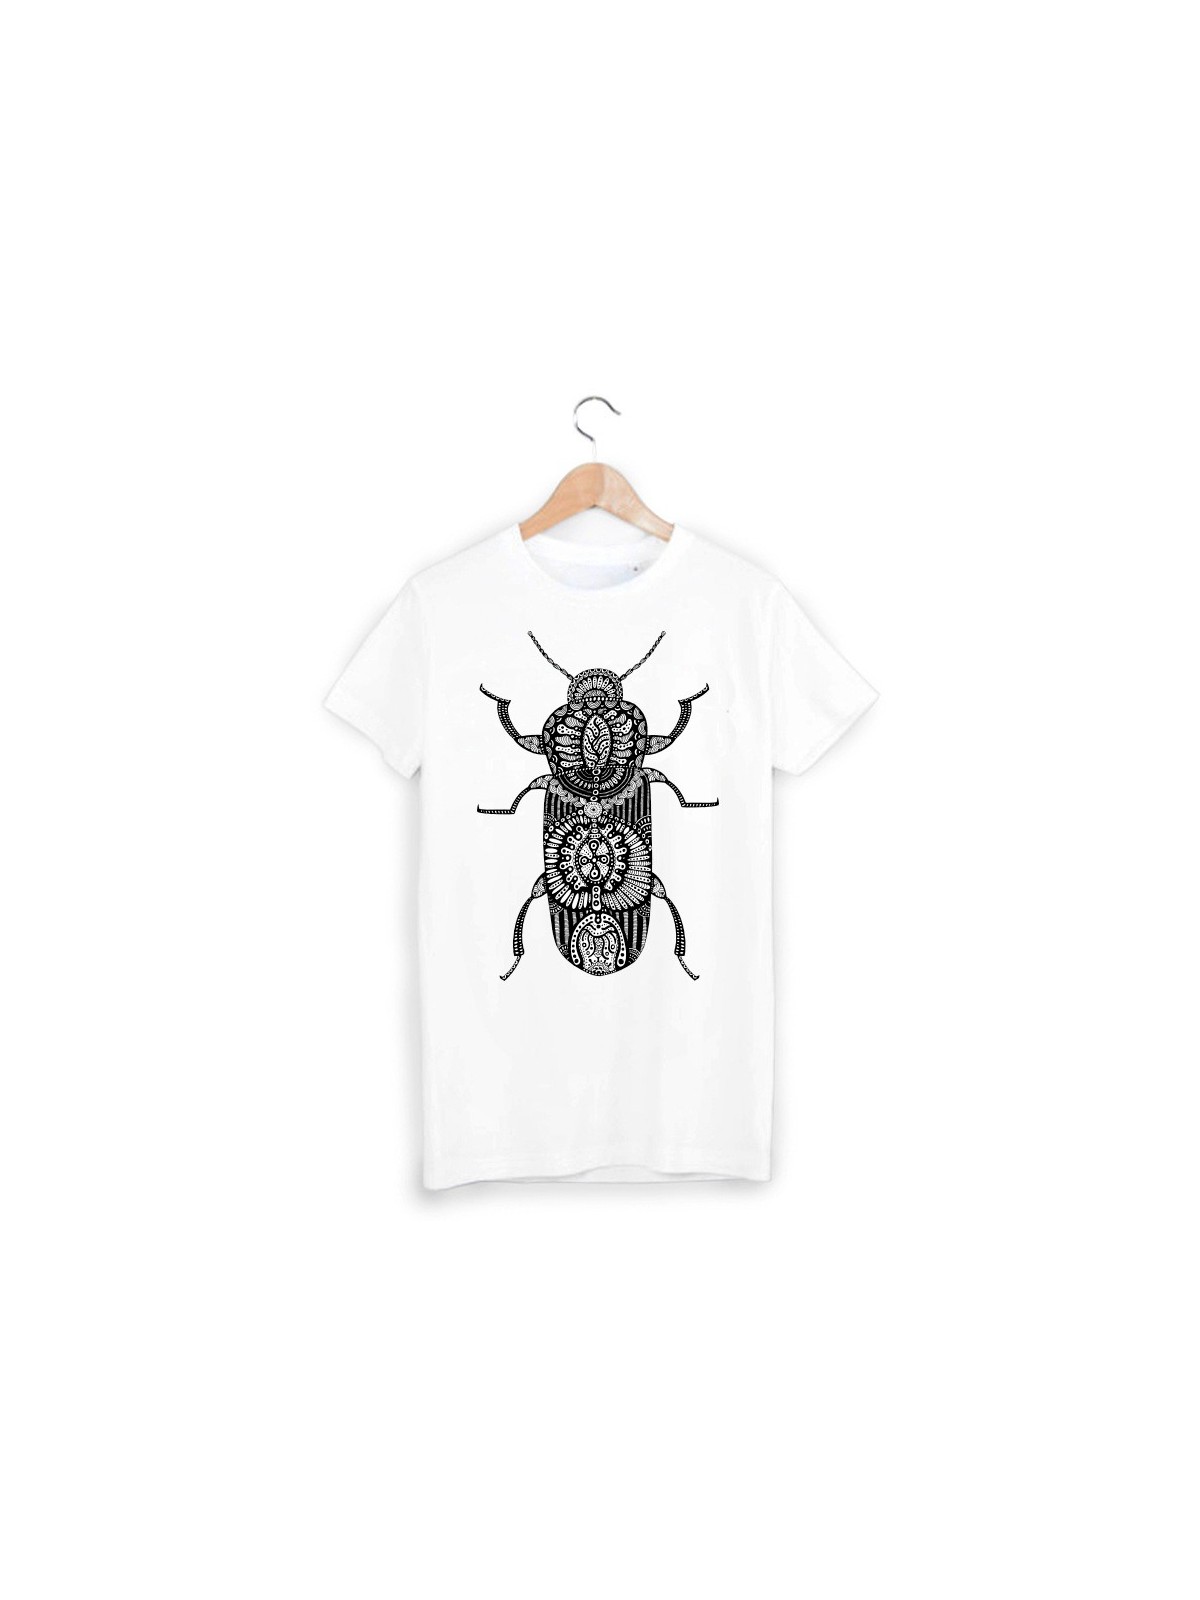 T-Shirt illustrÃ© insecte ref 1301